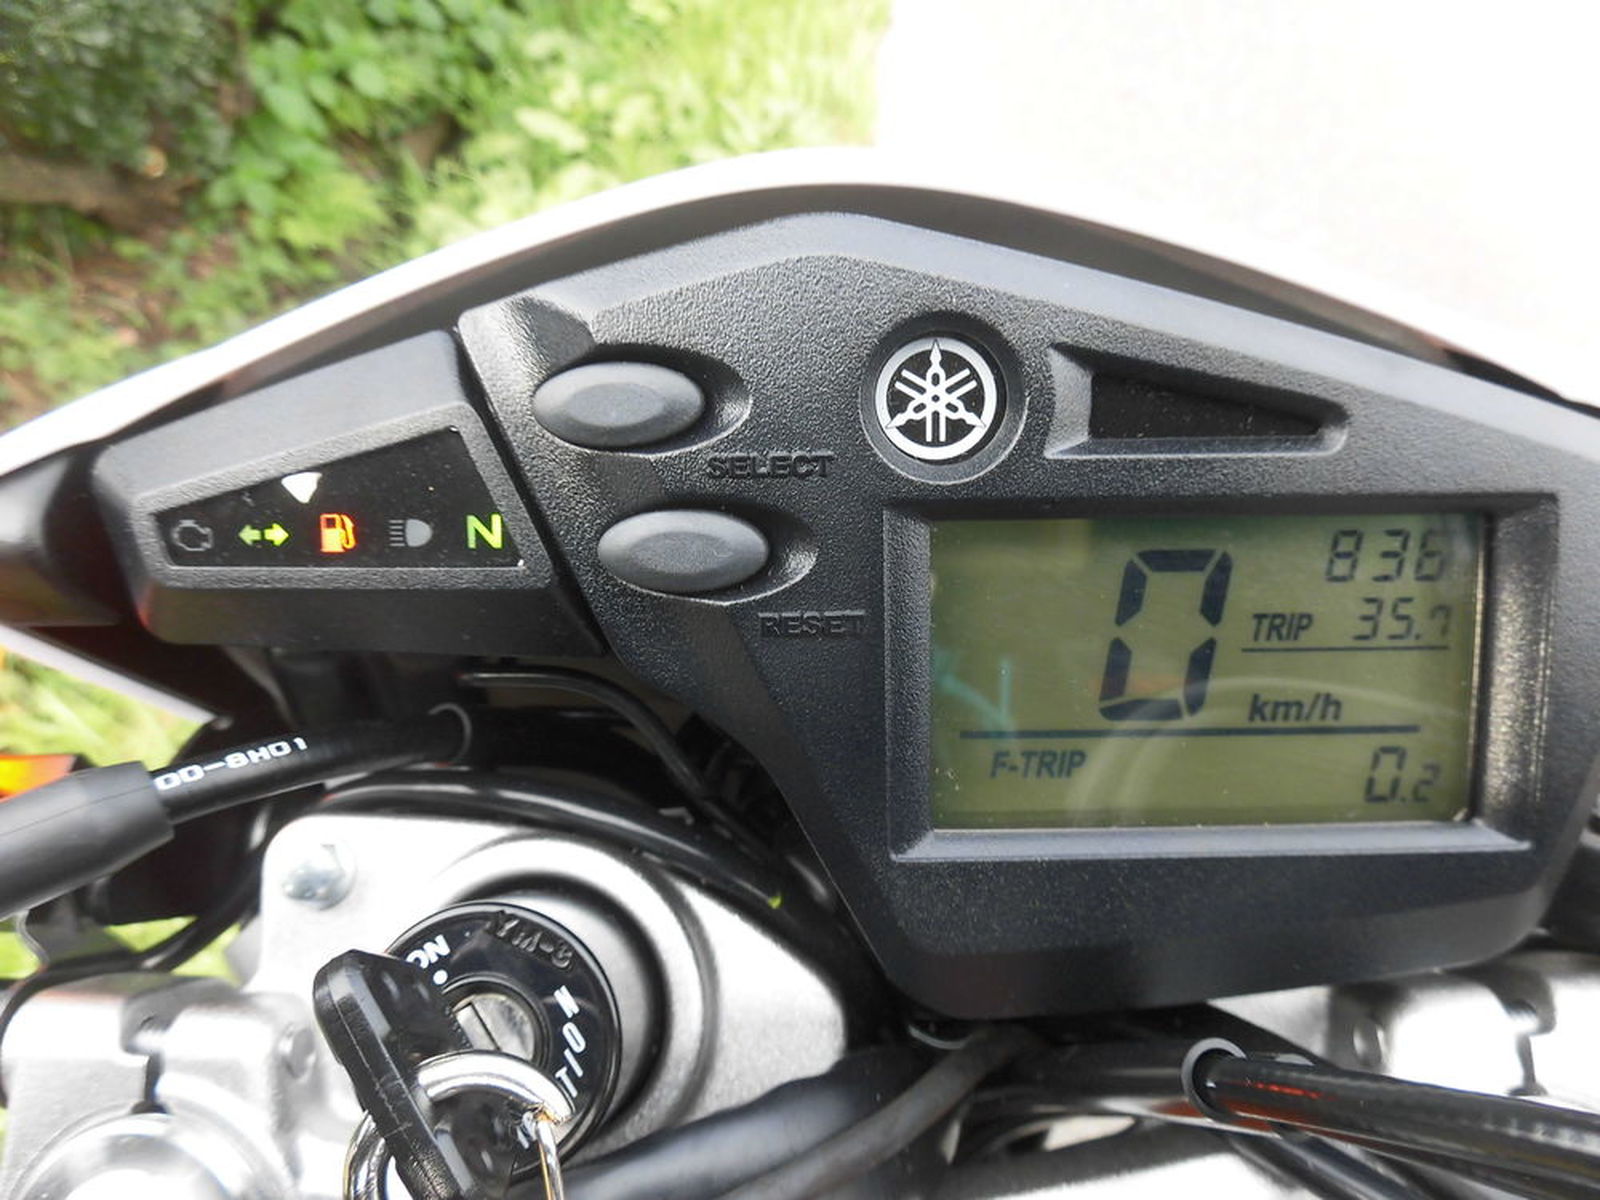 Yamaha セロー 250 ニューセロー250の燃費と給油ランプ点灯後の走行距離 ウェビックコミュニティ